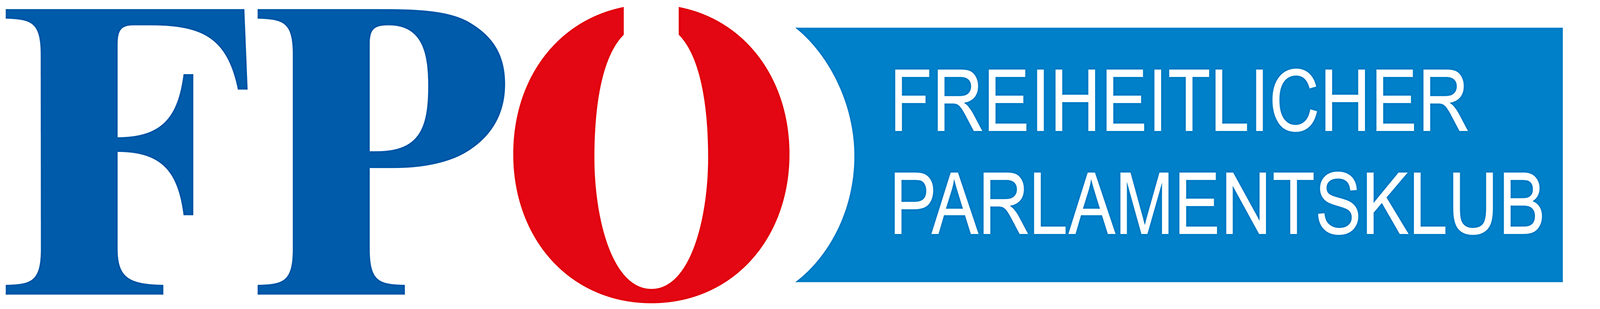 FPÖ-Parlamentsklub